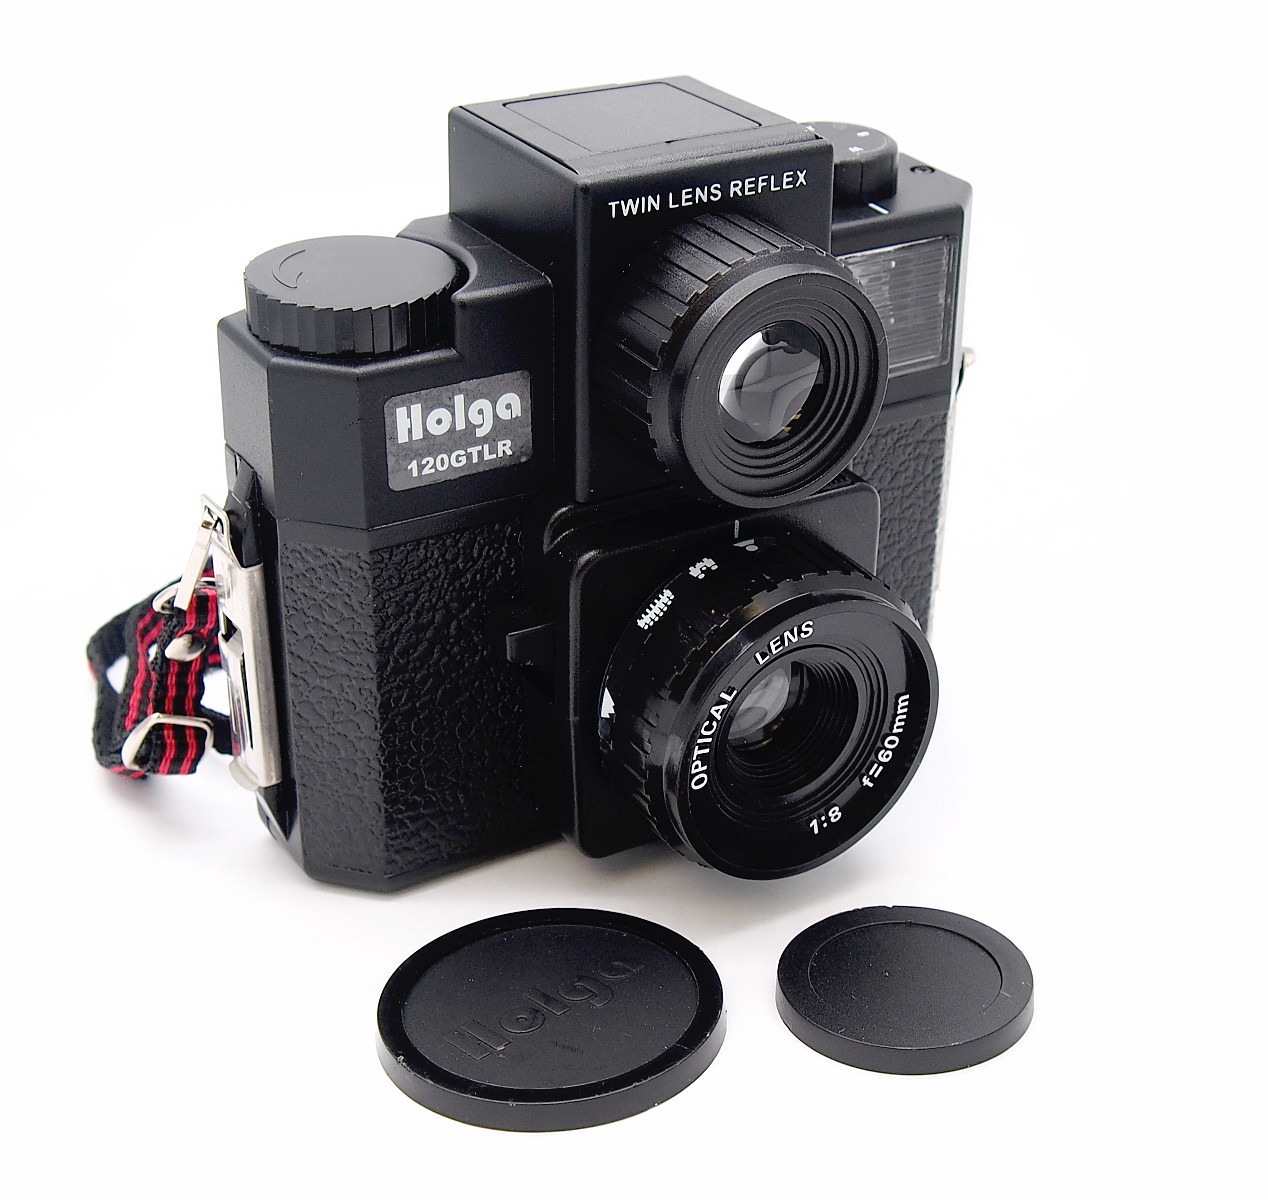 Holga 120G TLR 6x6cm Camera with Flash #9024M